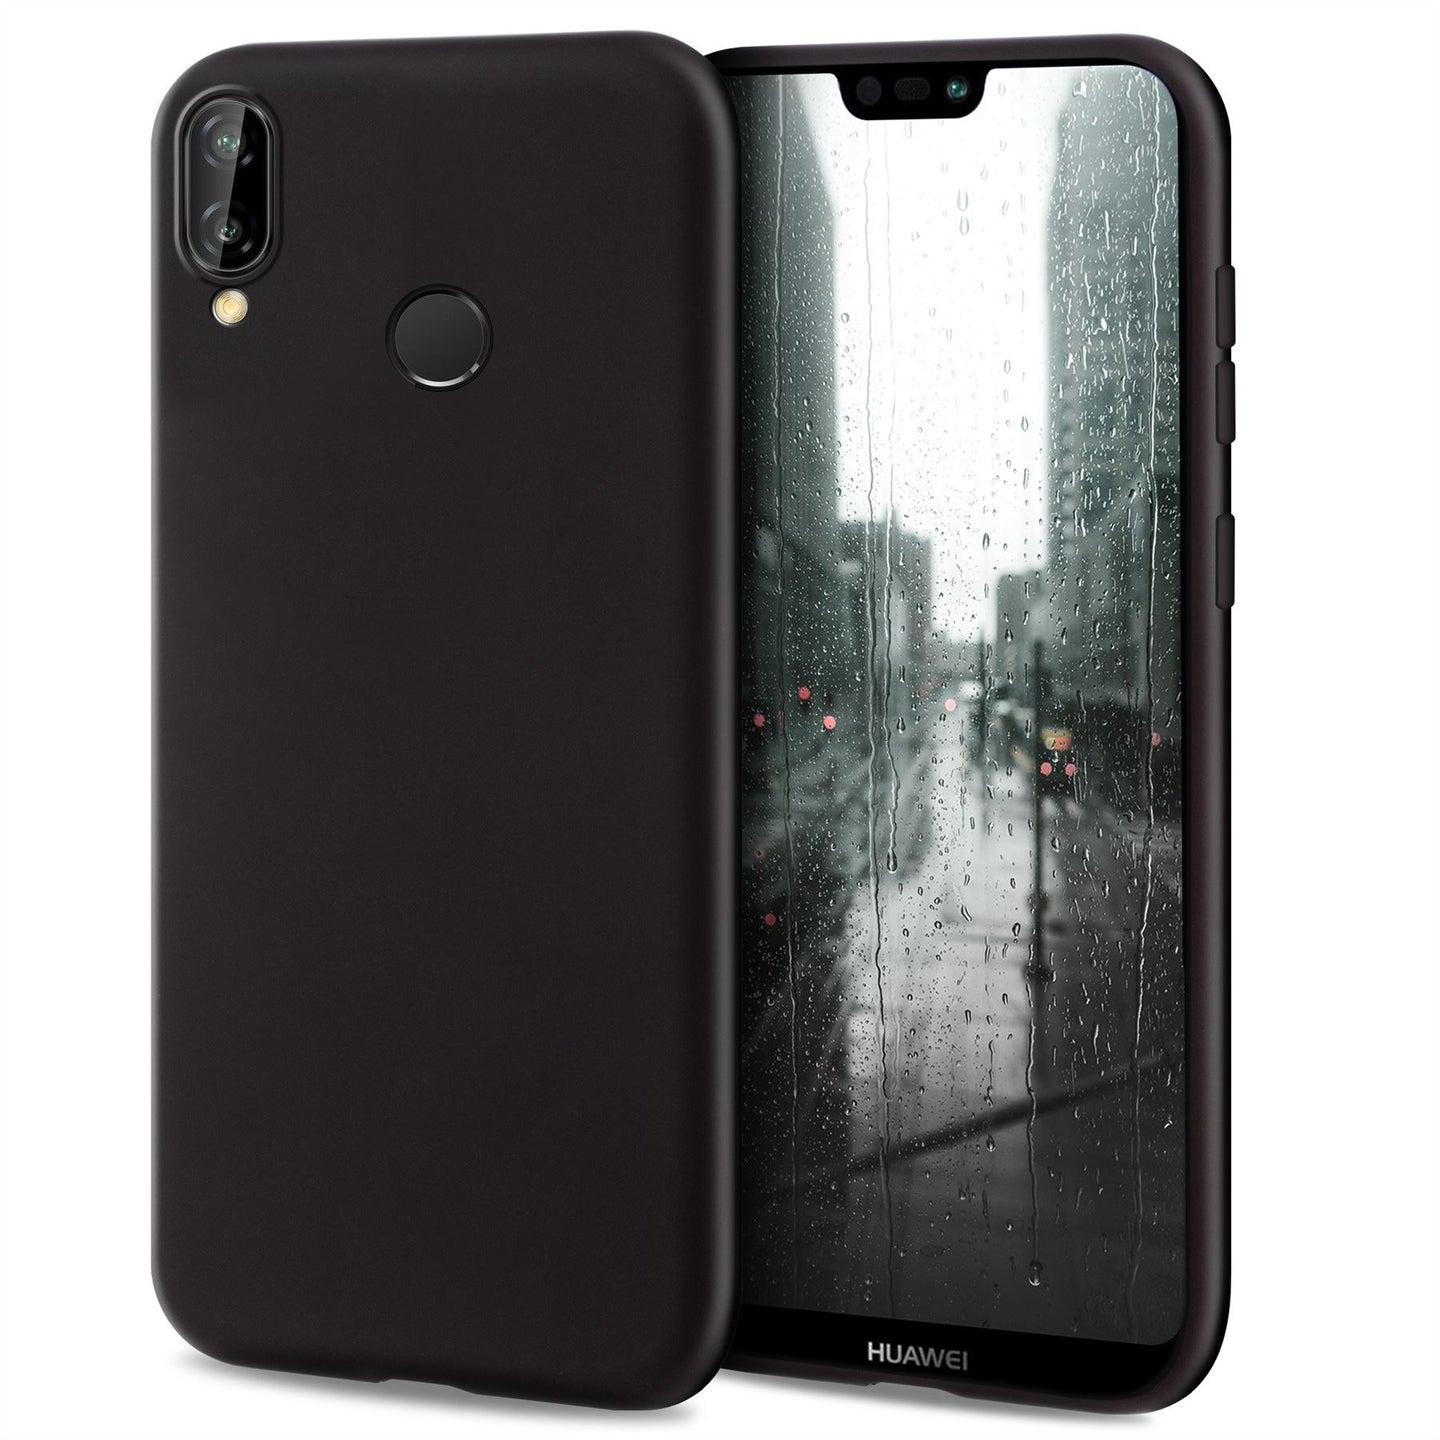 Moozy Minimalist Series Silicone Case for Huawei P20 Lite, Black - Matte Finish Slim Soft TPU Cover